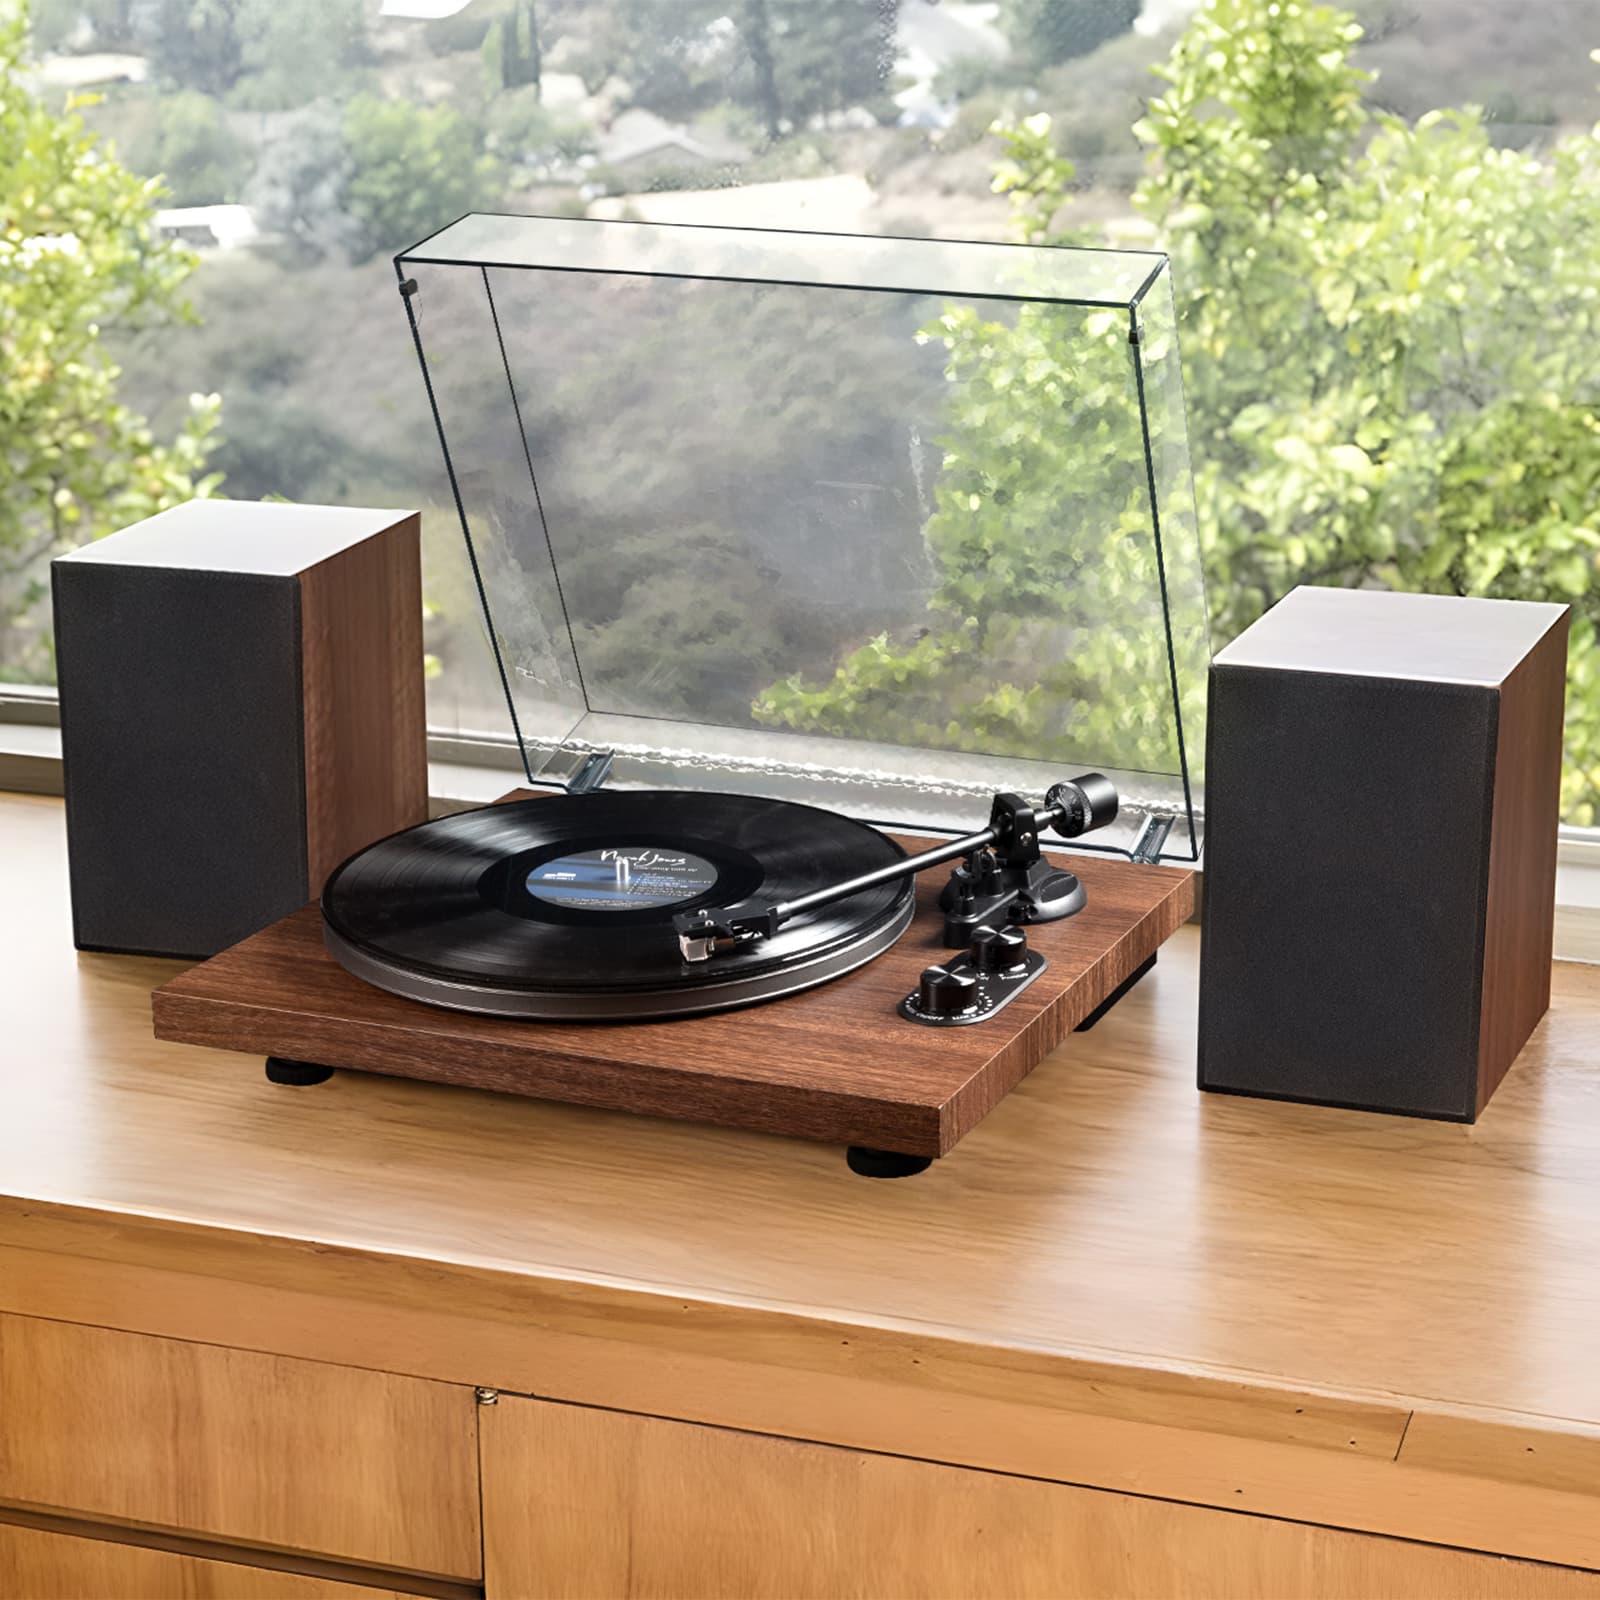 The UD006 Audiophile-level Home Bluetooth Hi-Fi Vinyl Record Player Audio Set